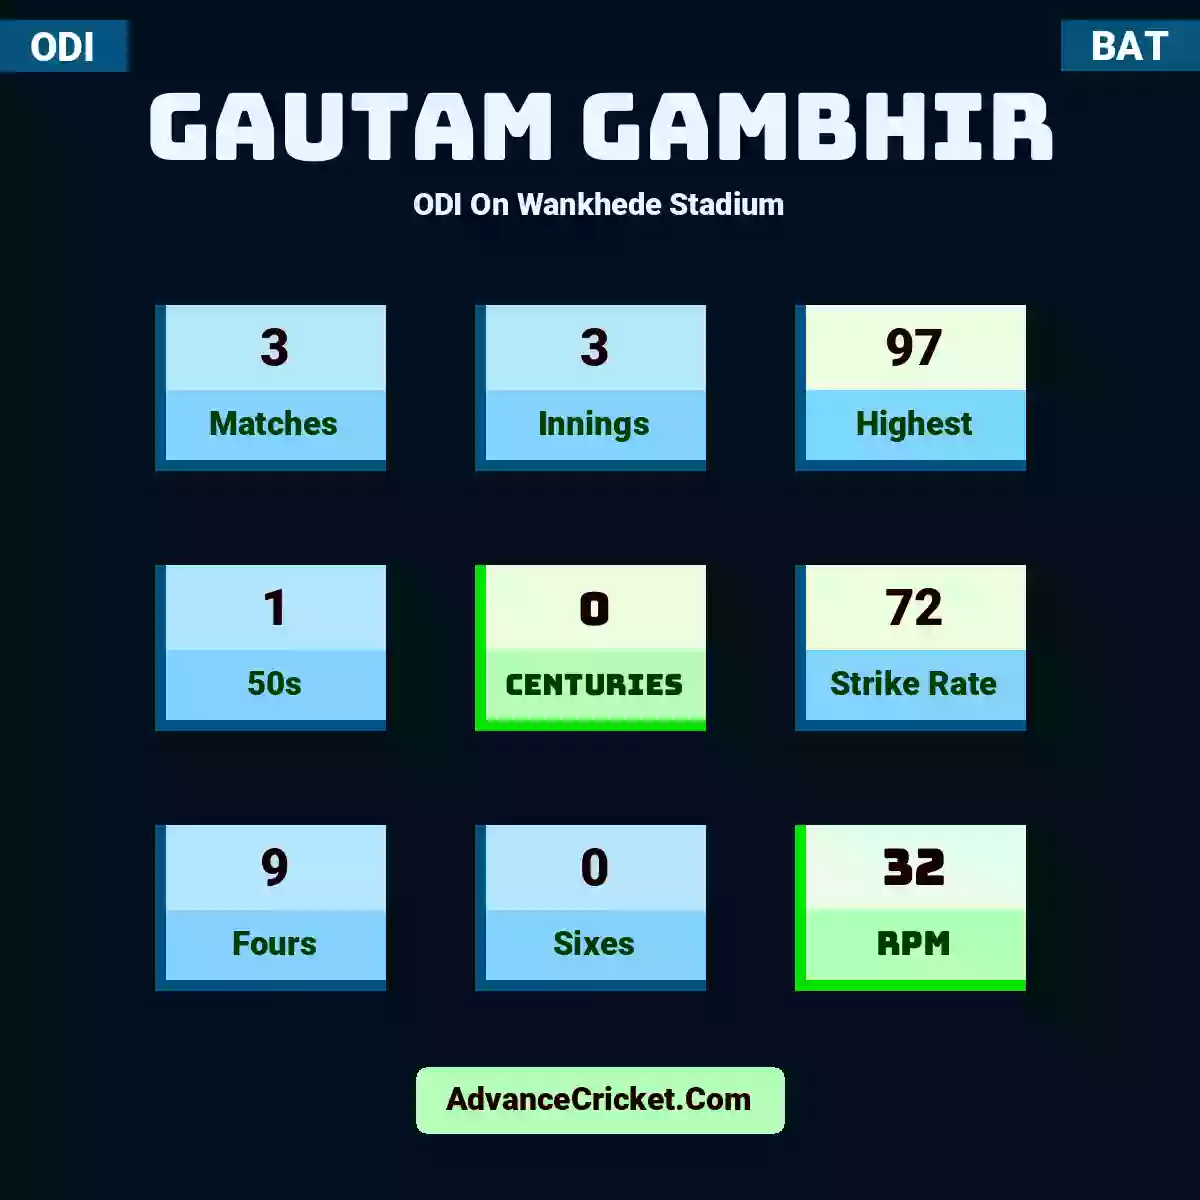 Gautam Gambhir ODI  On Wankhede Stadium, Gautam Gambhir played 3 matches, scored 97 runs as highest, 1 half-centuries, and 0 centuries, with a strike rate of 72. G.Gambhir hit 9 fours and 0 sixes, with an RPM of 32.